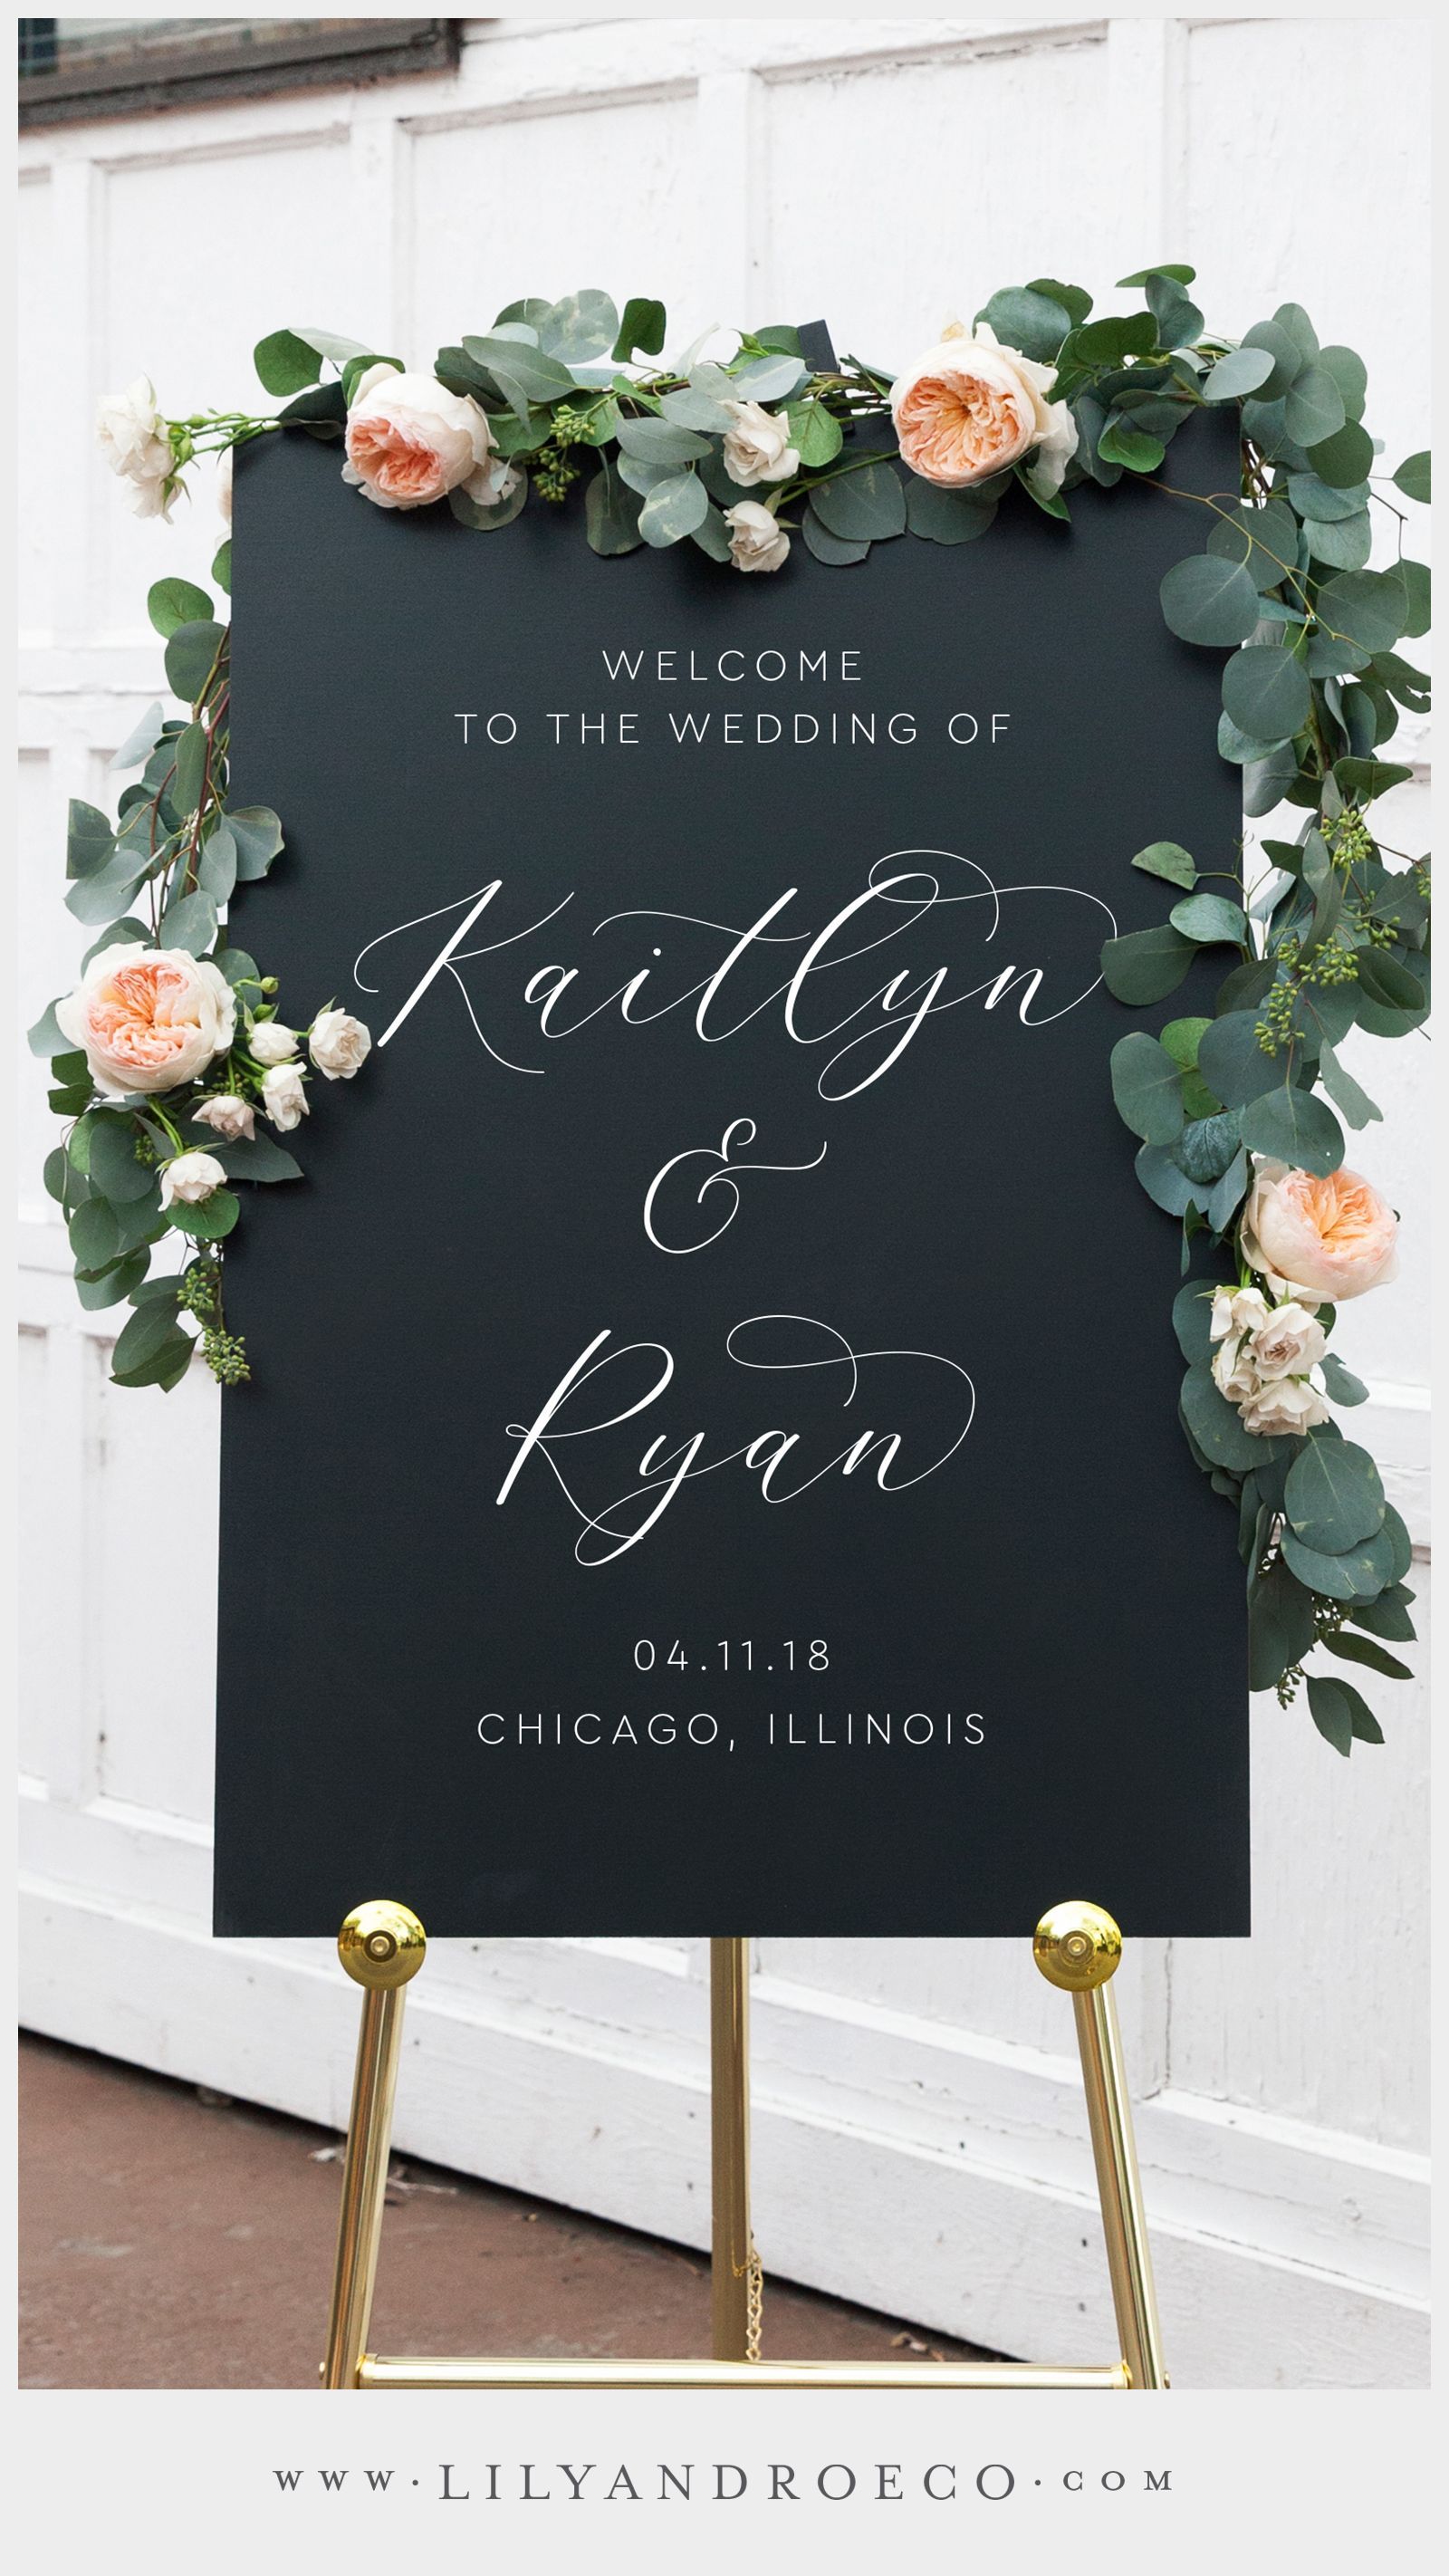 Beautiful Welcome Signs for Wedding Receptions -   21 wedding Elegant decoration ideas